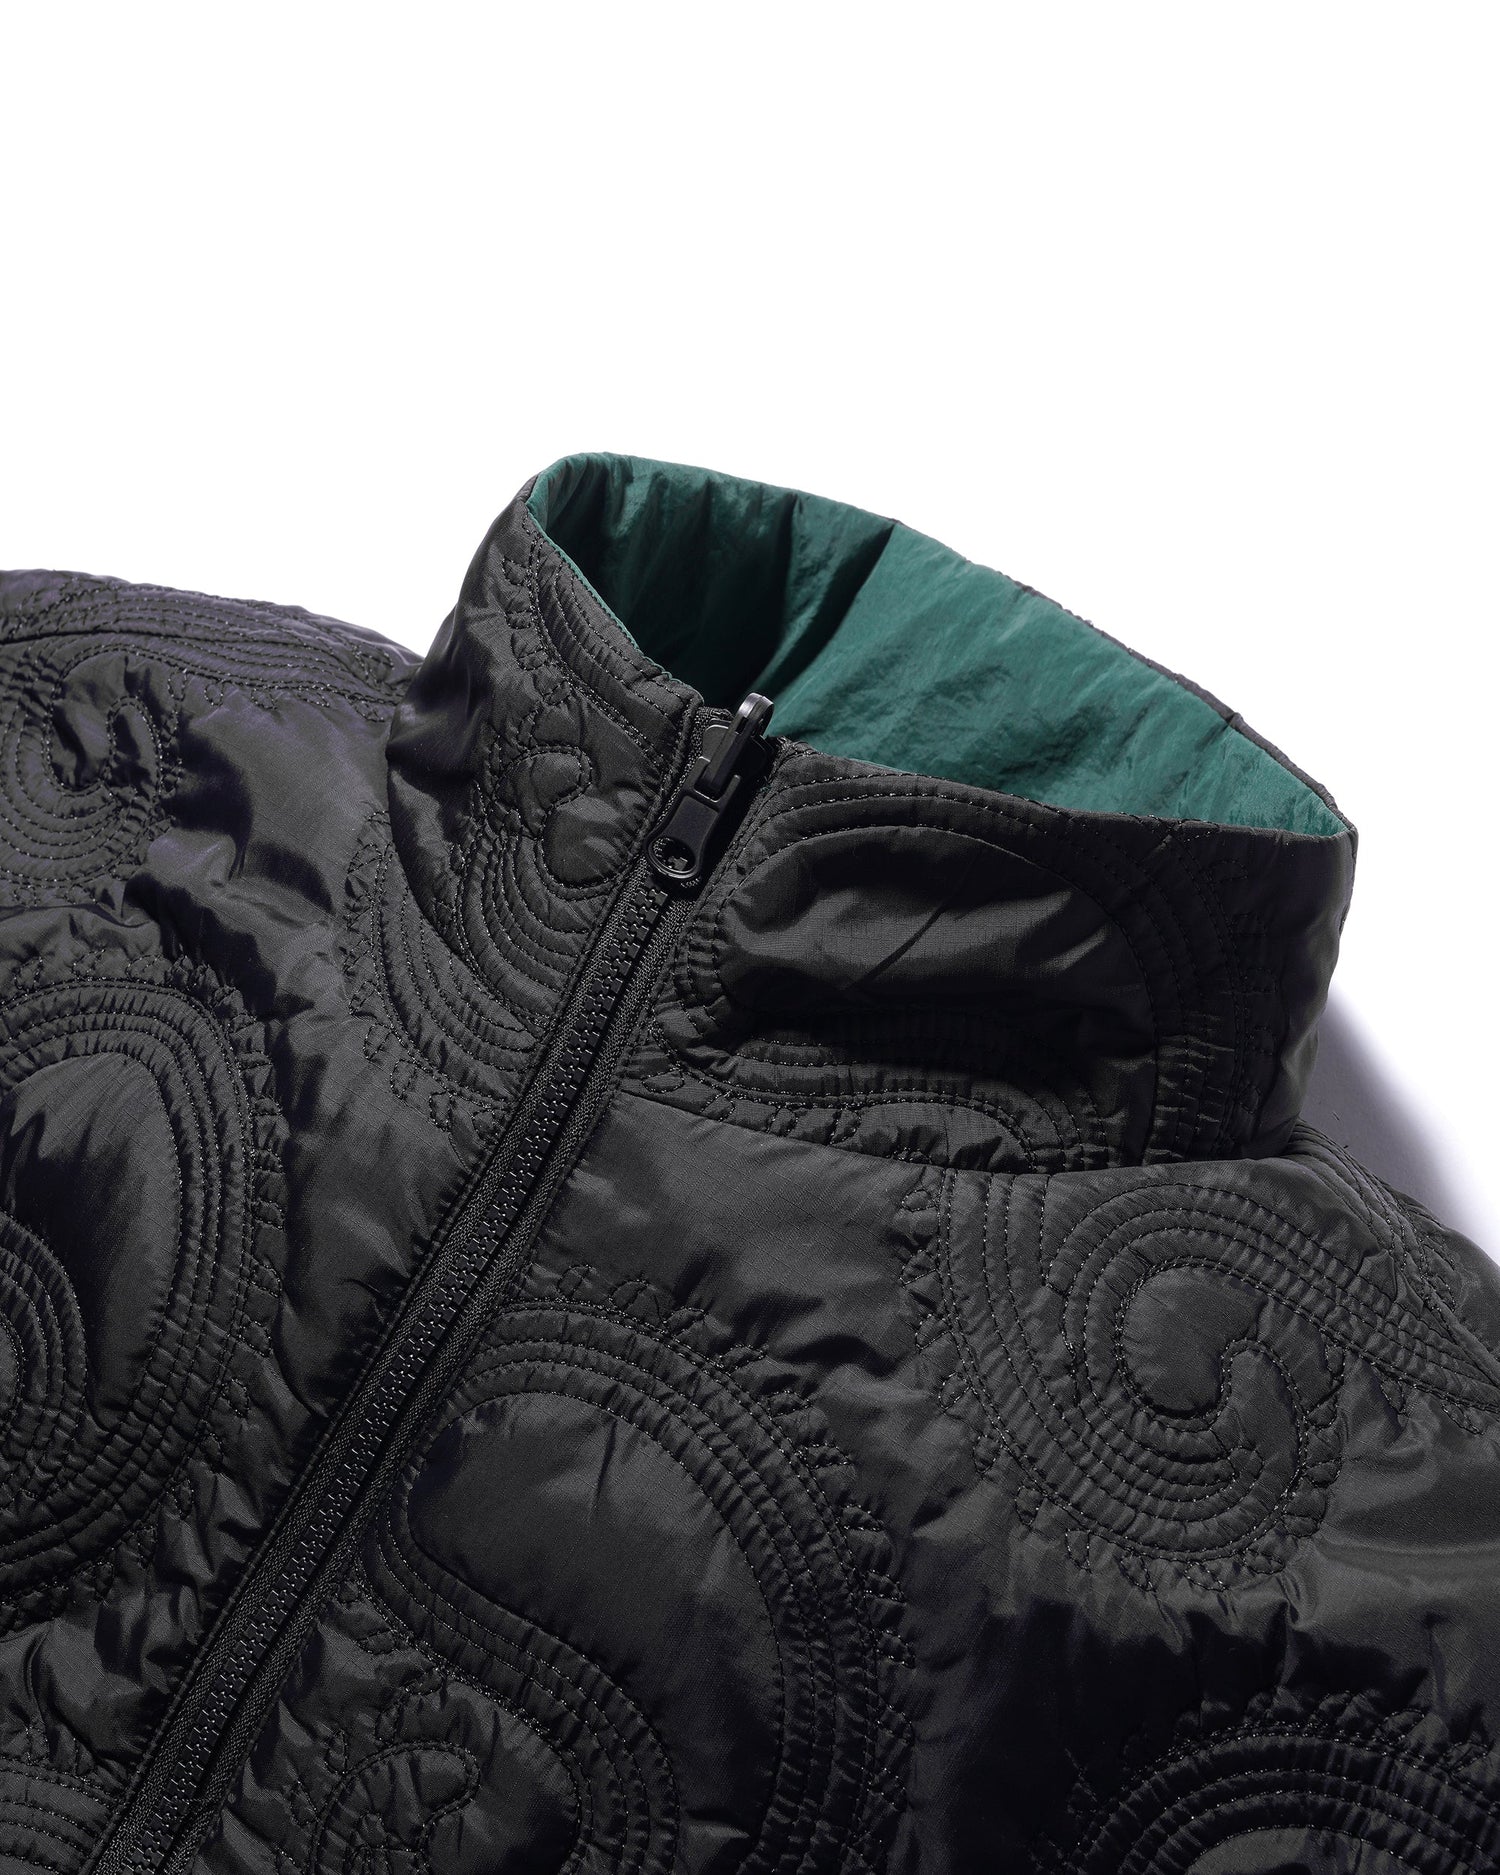 Paisley Reversible Puffer Jacket, Black